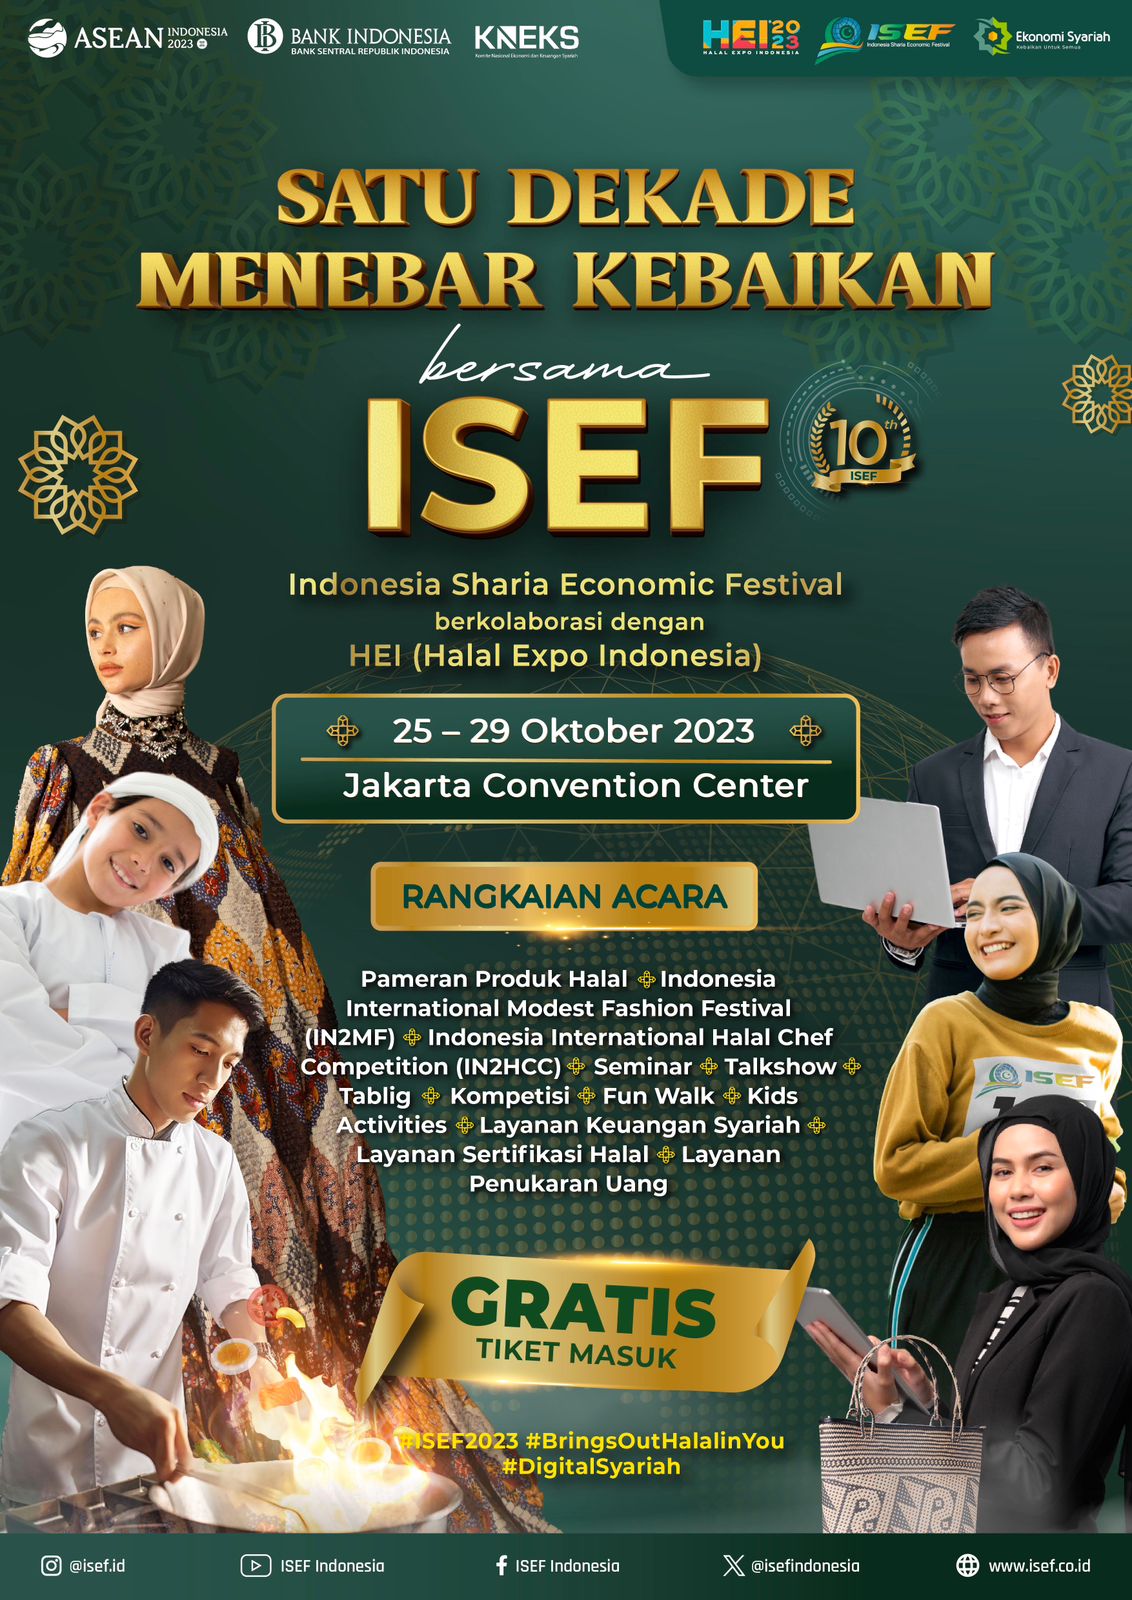 Satu Dekade Bersama ISEF (Indonesia Sharia Economic Festival)